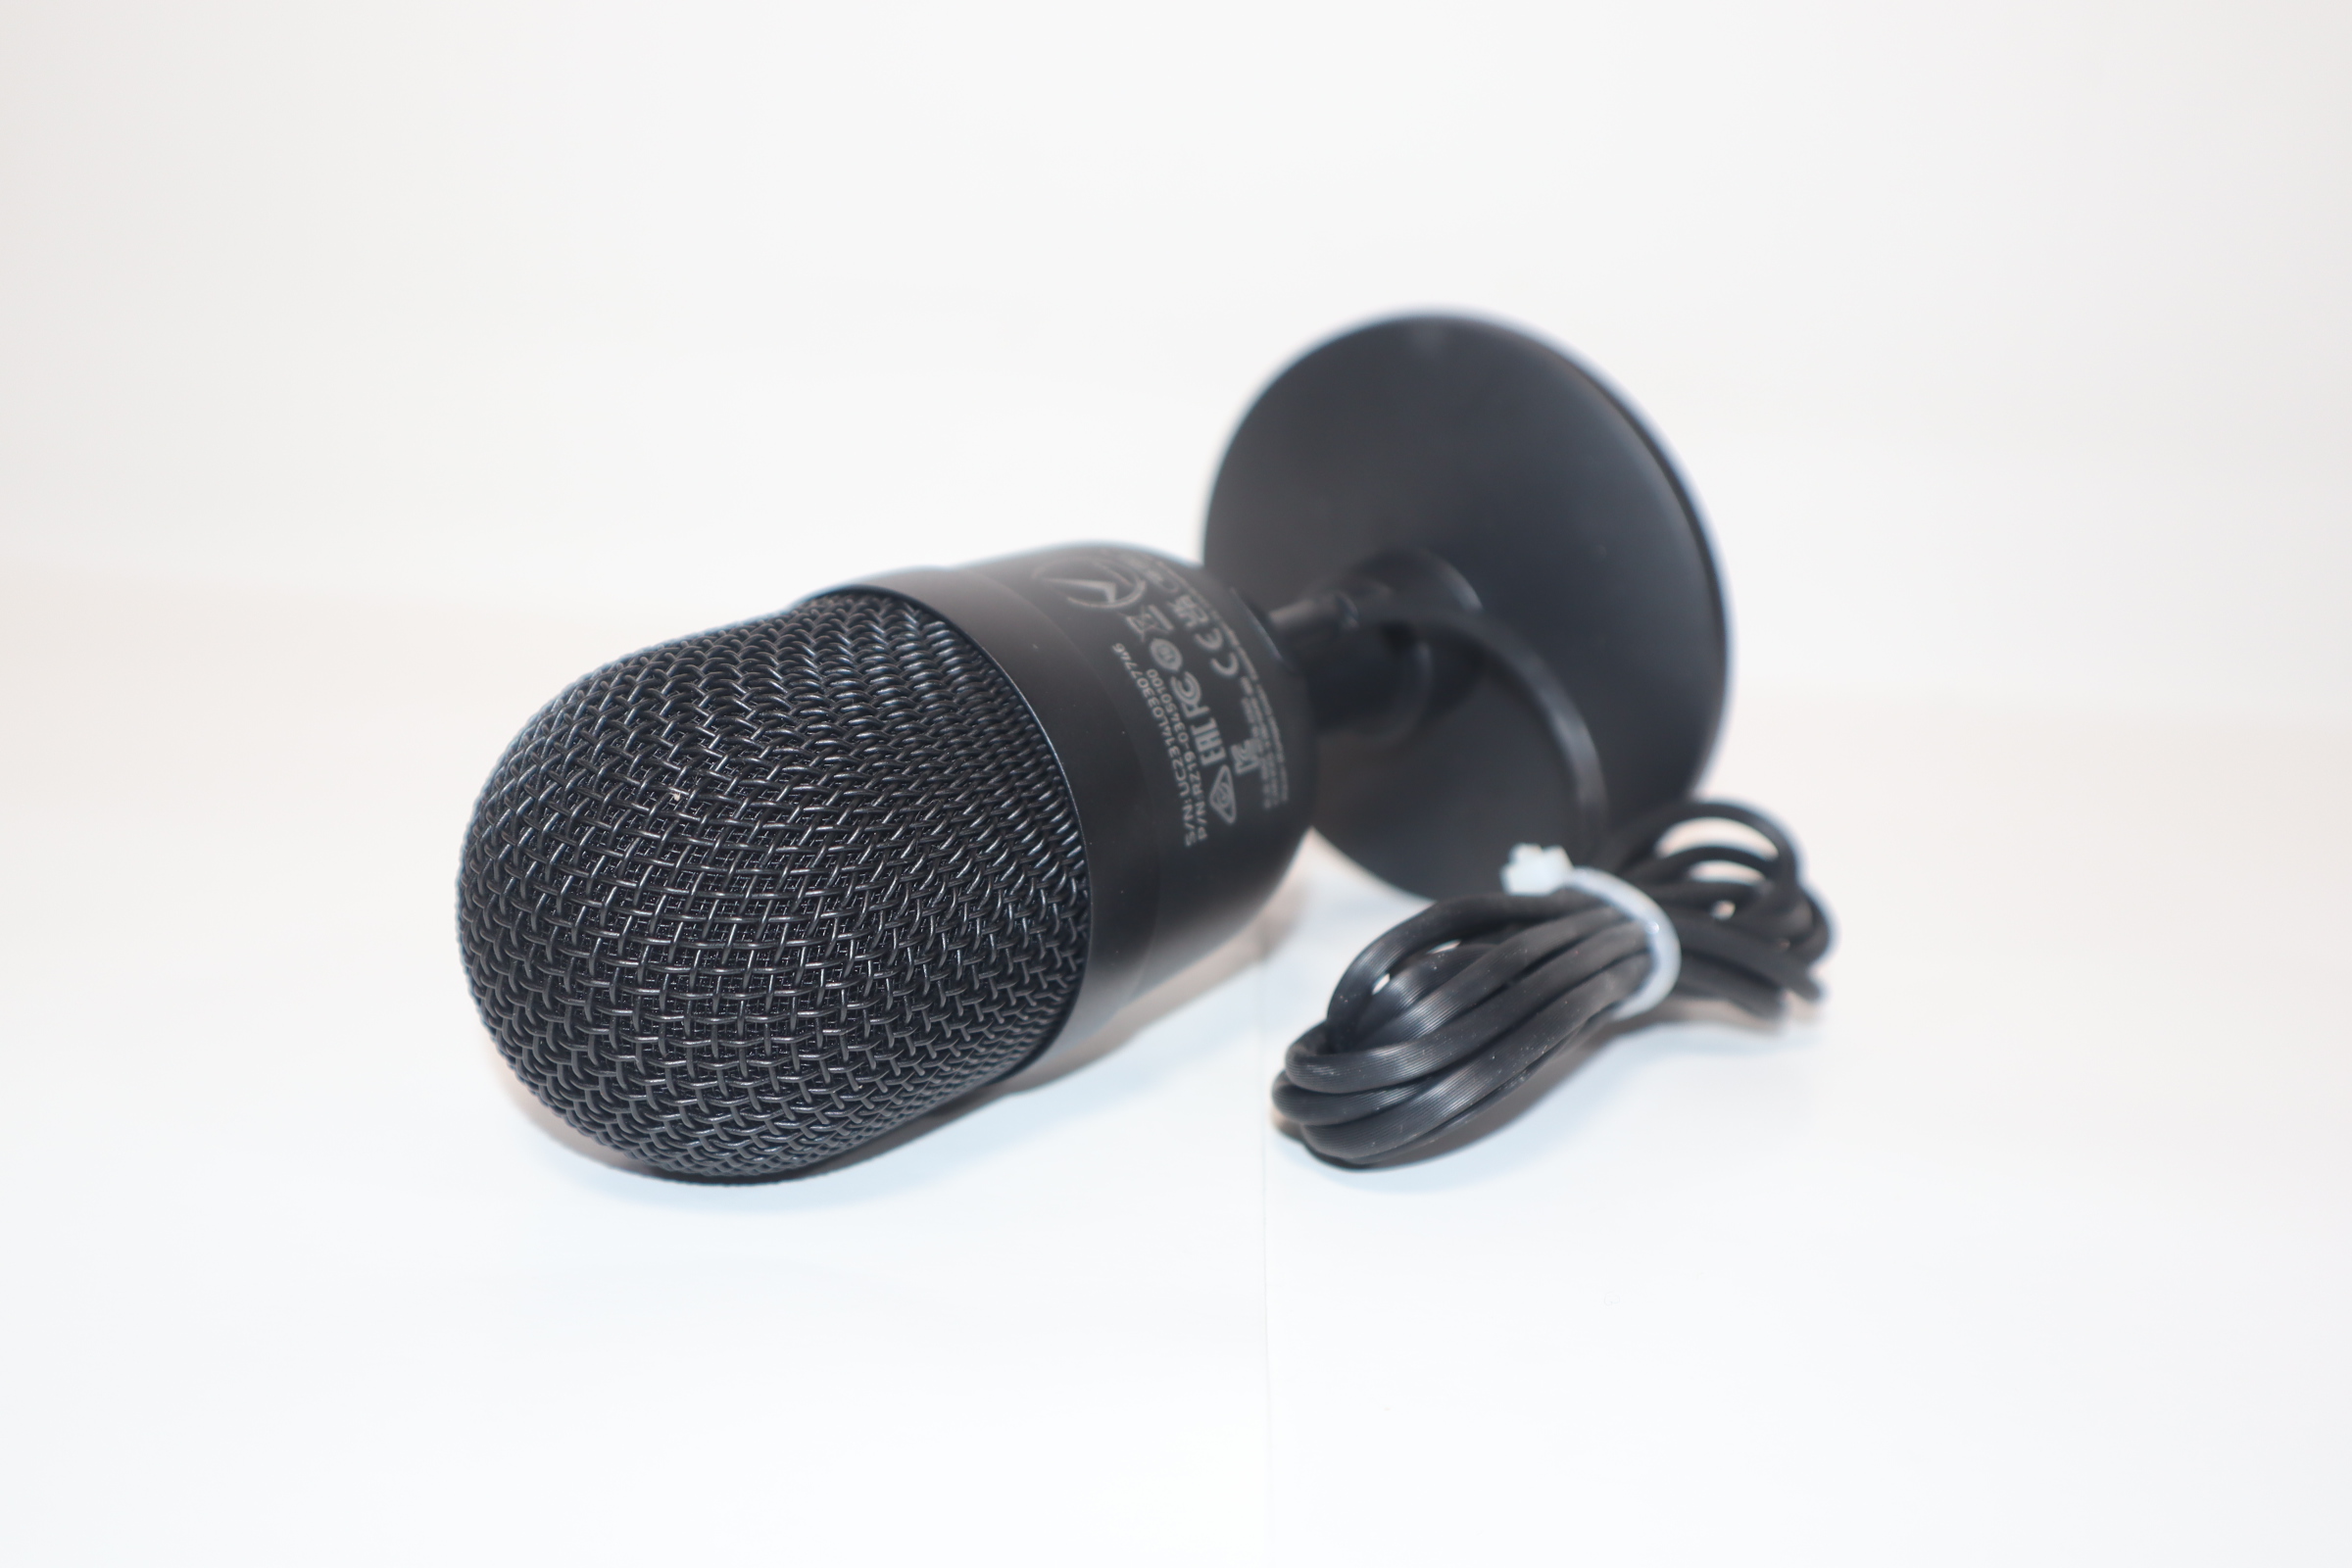 Razer Seiren Mini Ultra-Compact Condenser Microphone